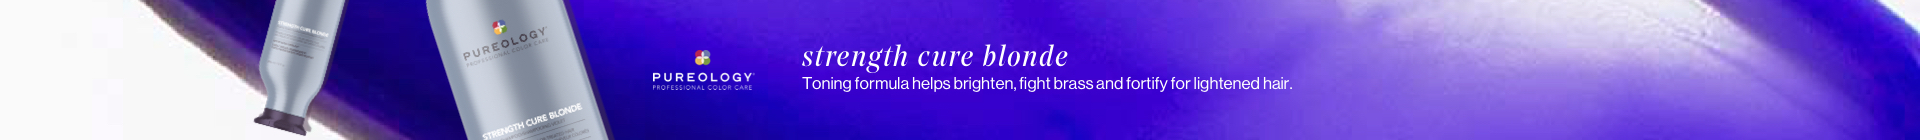 cat-banner-pureology-strength-cure-blonde | L'Oréal Partner Shop